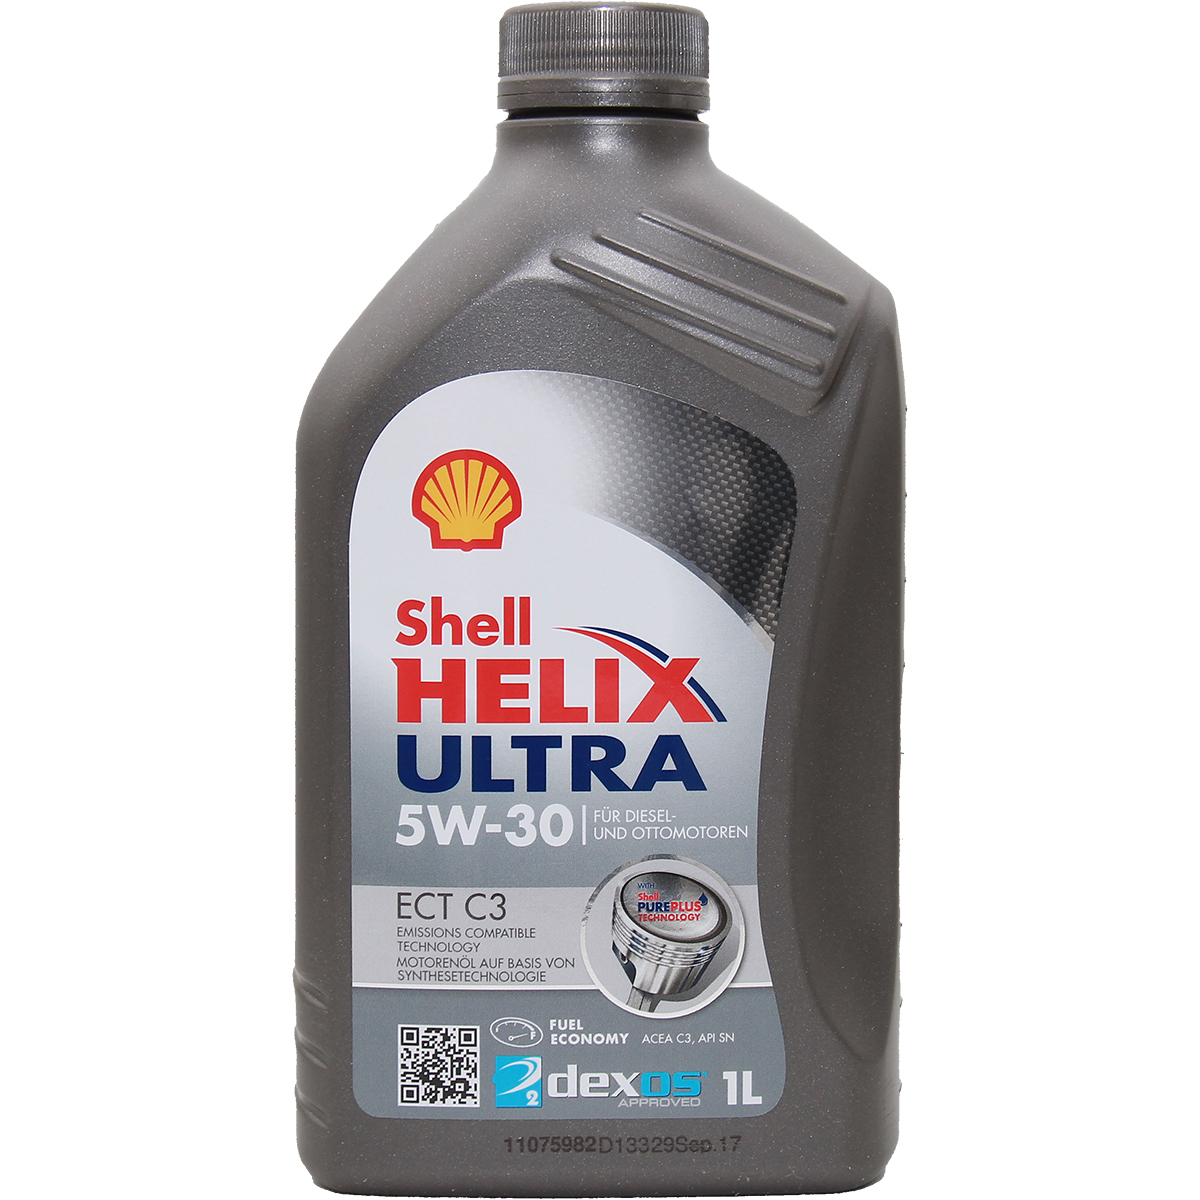 Shell Helix Ultra ECT C3 5W-30 1 Liter